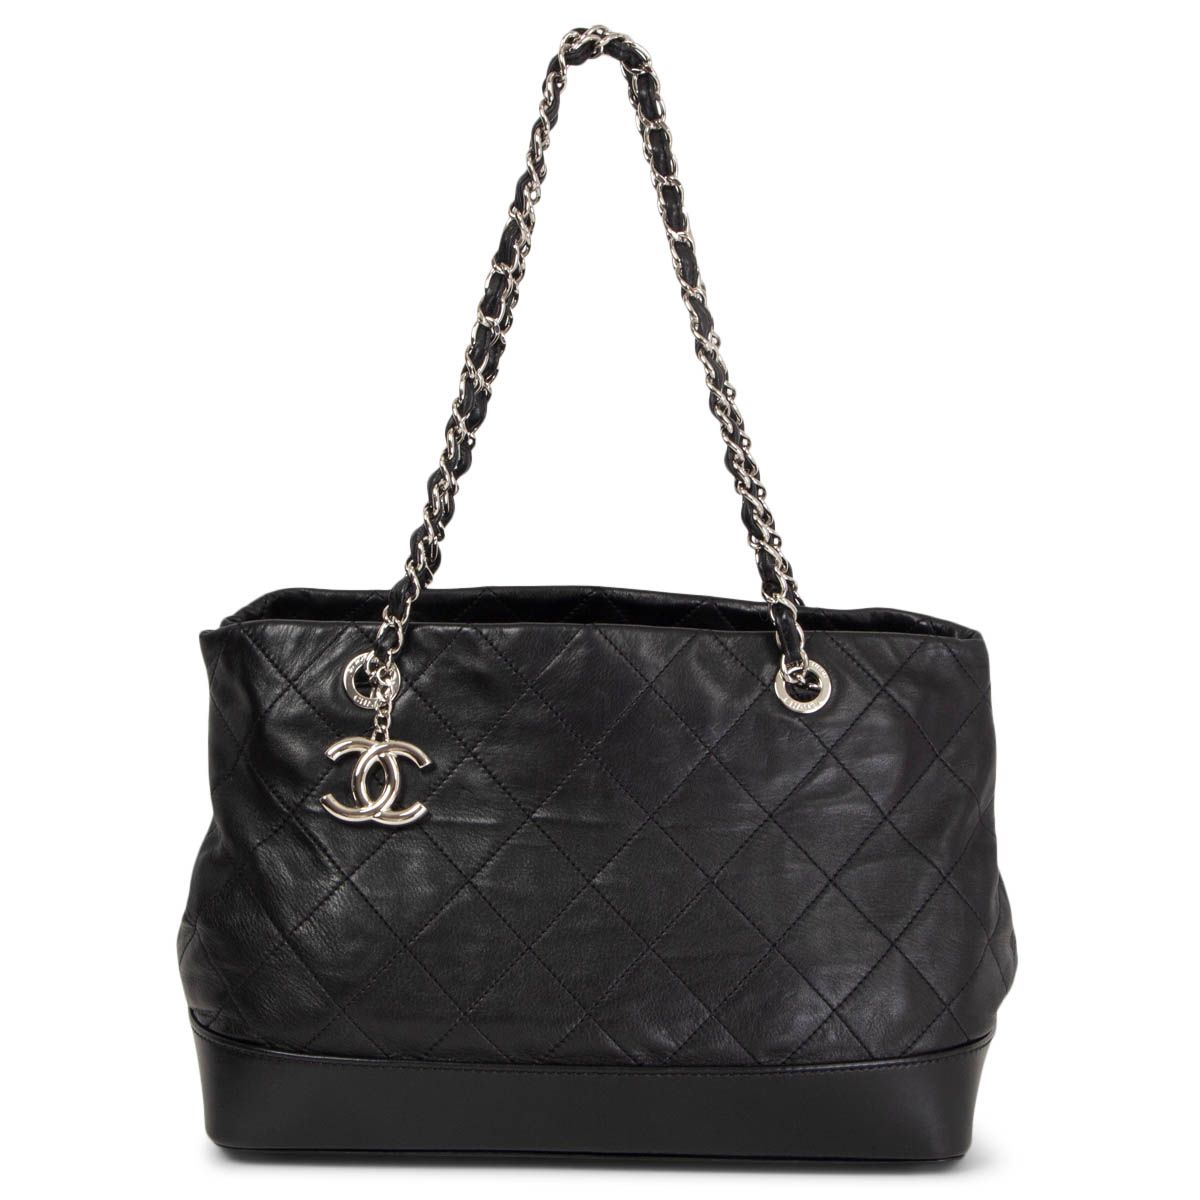 Chanel VIP Medium Shopping Bag Black Iridescent Calfskin Leather Tote 2011